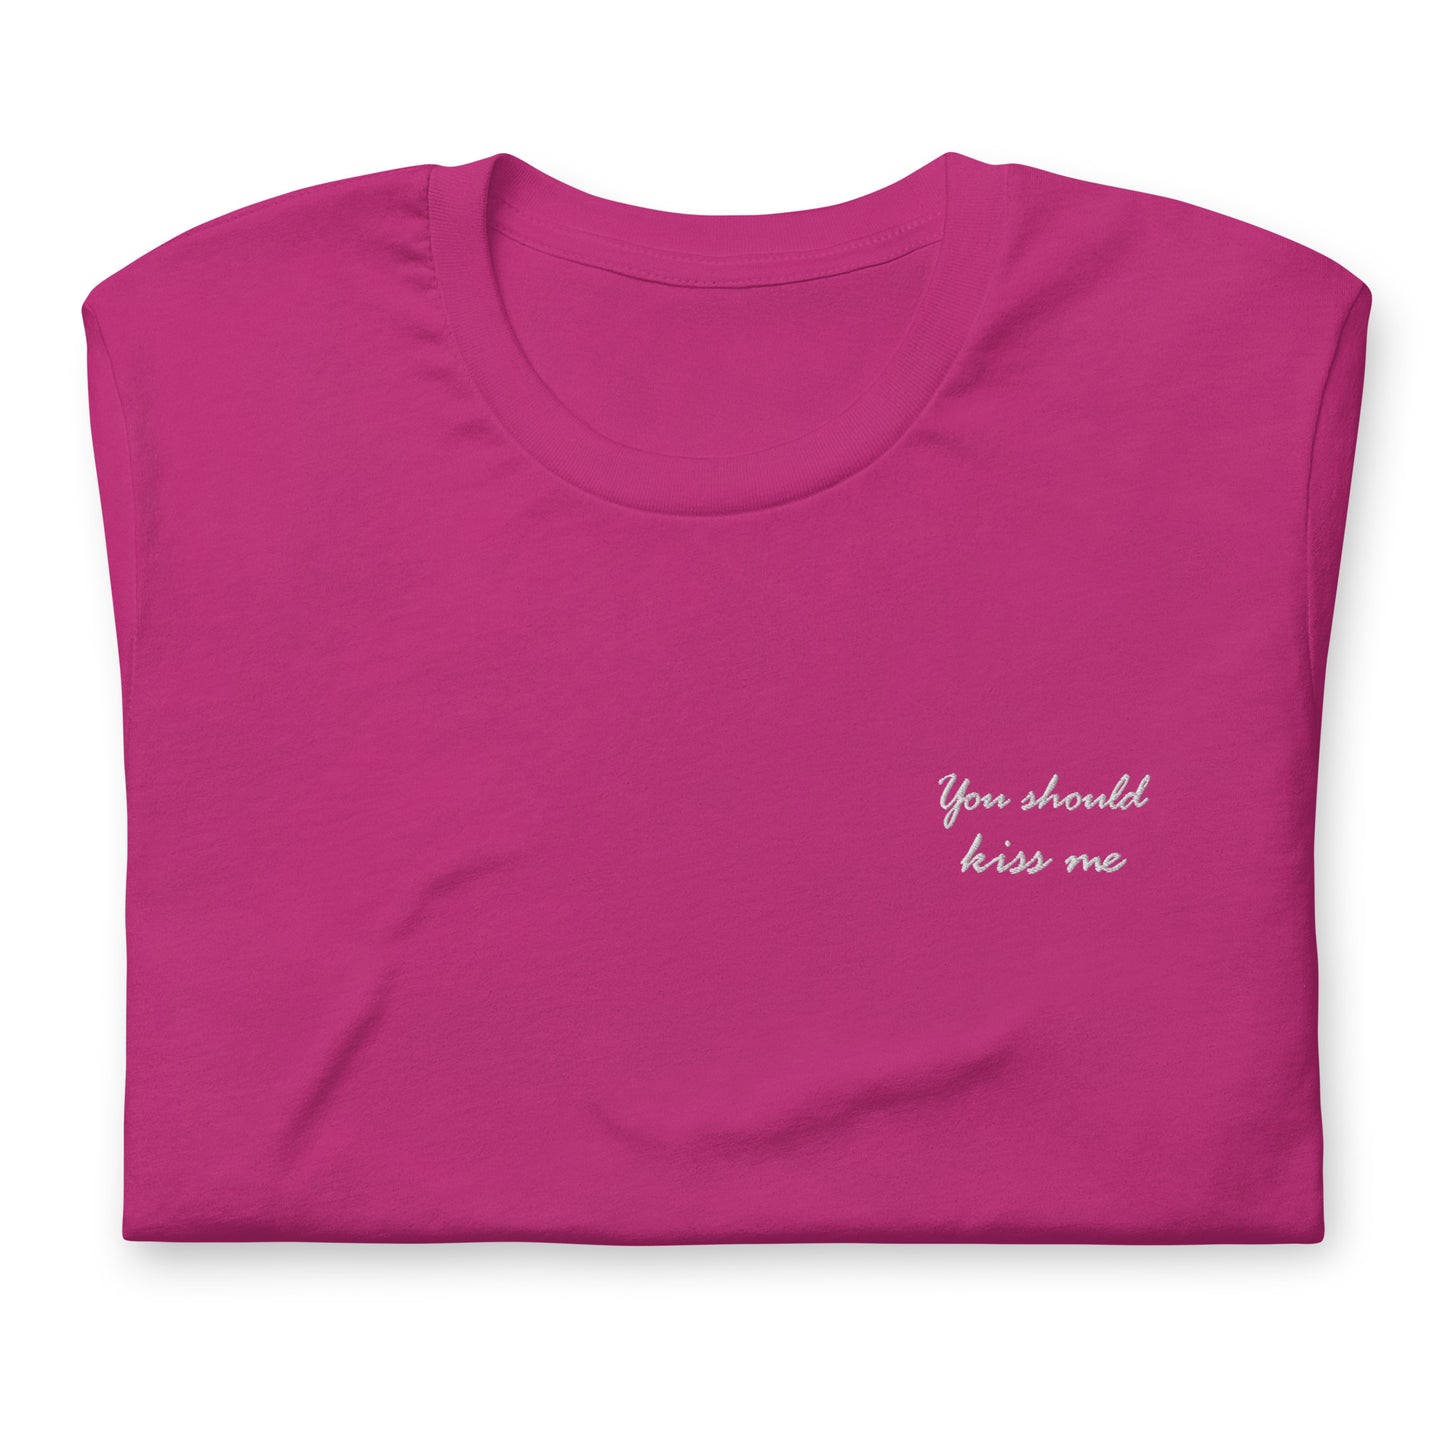 You should kiss me - besticktes T-Shirt